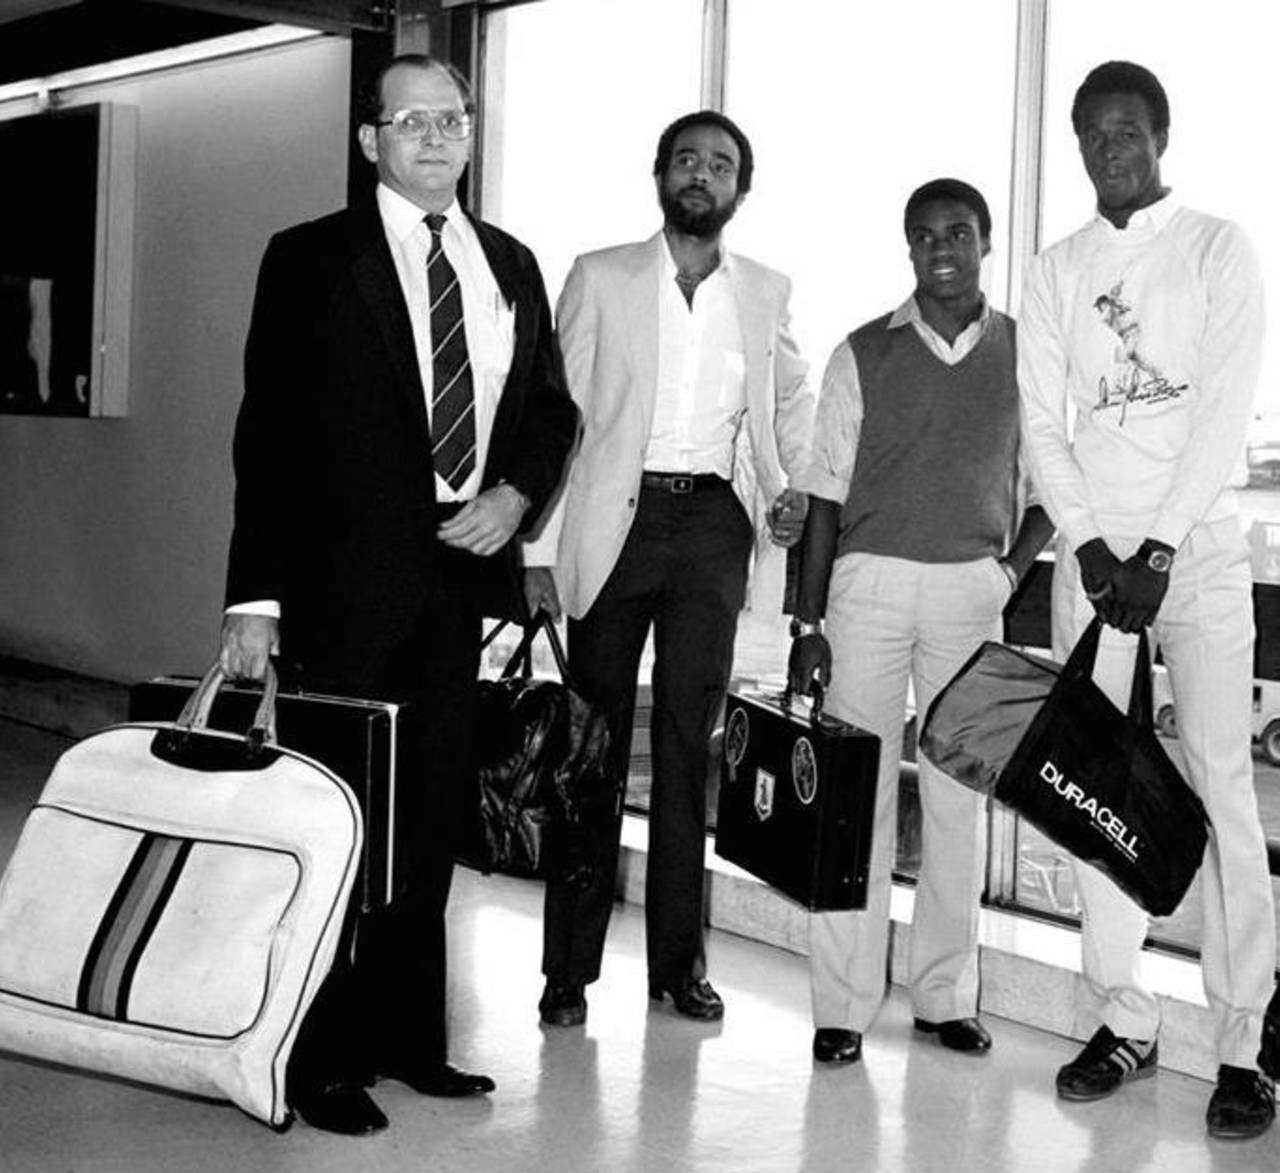 Steve Camacho (left) as West Indies manager along with Jeff Dujon, Gus Logie and Winston Davis